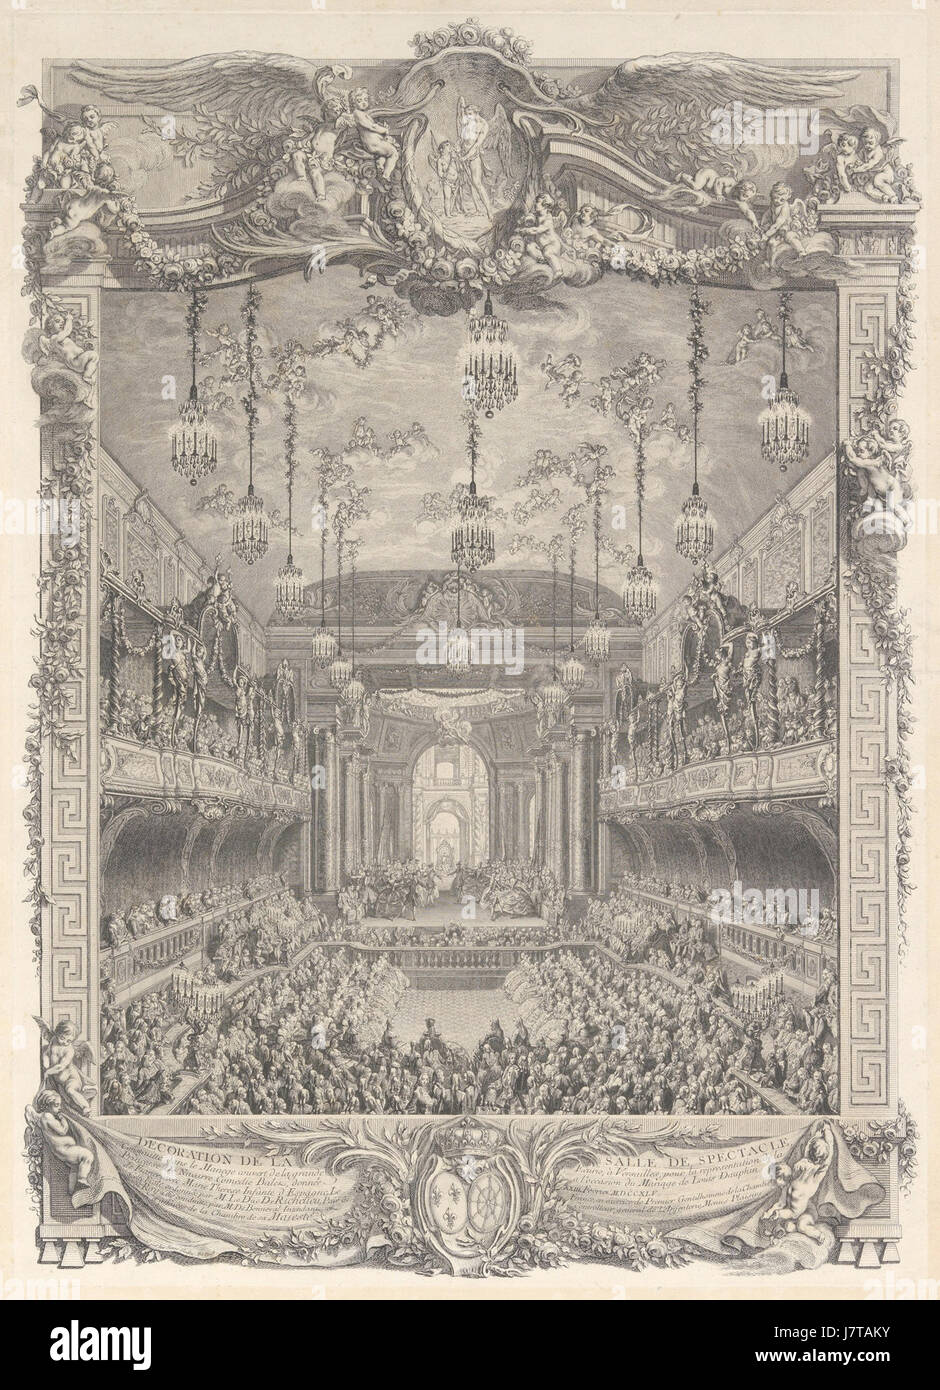 Charles Nicolas Cochin II, Decoration de la salle de spectacle construite a Versailles pour la representation de la Princesse de Navarre, ca. 1745 Stock Photo